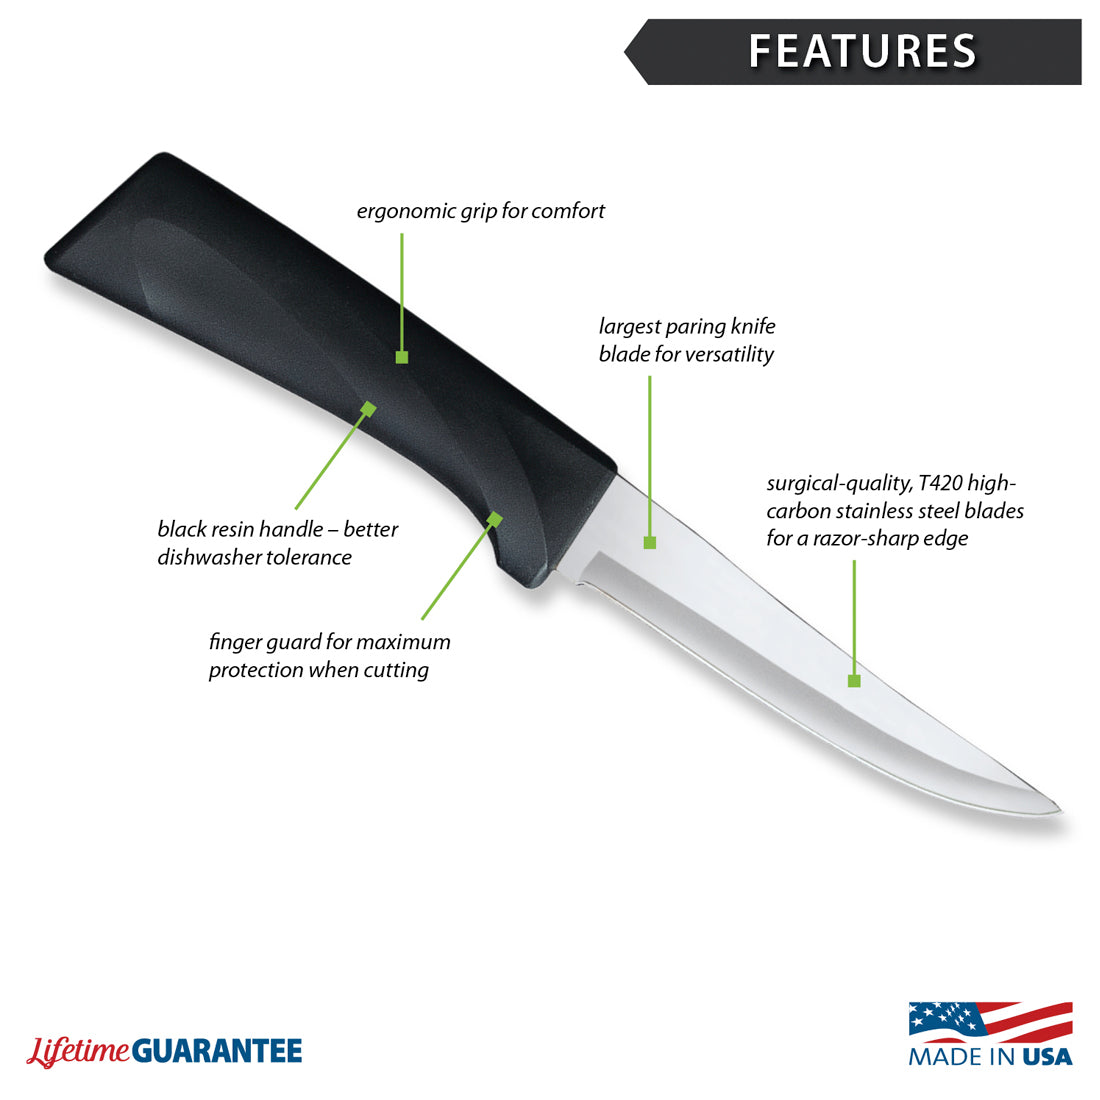 Vegetable Knife - buy now, sharp, dishwsher safe